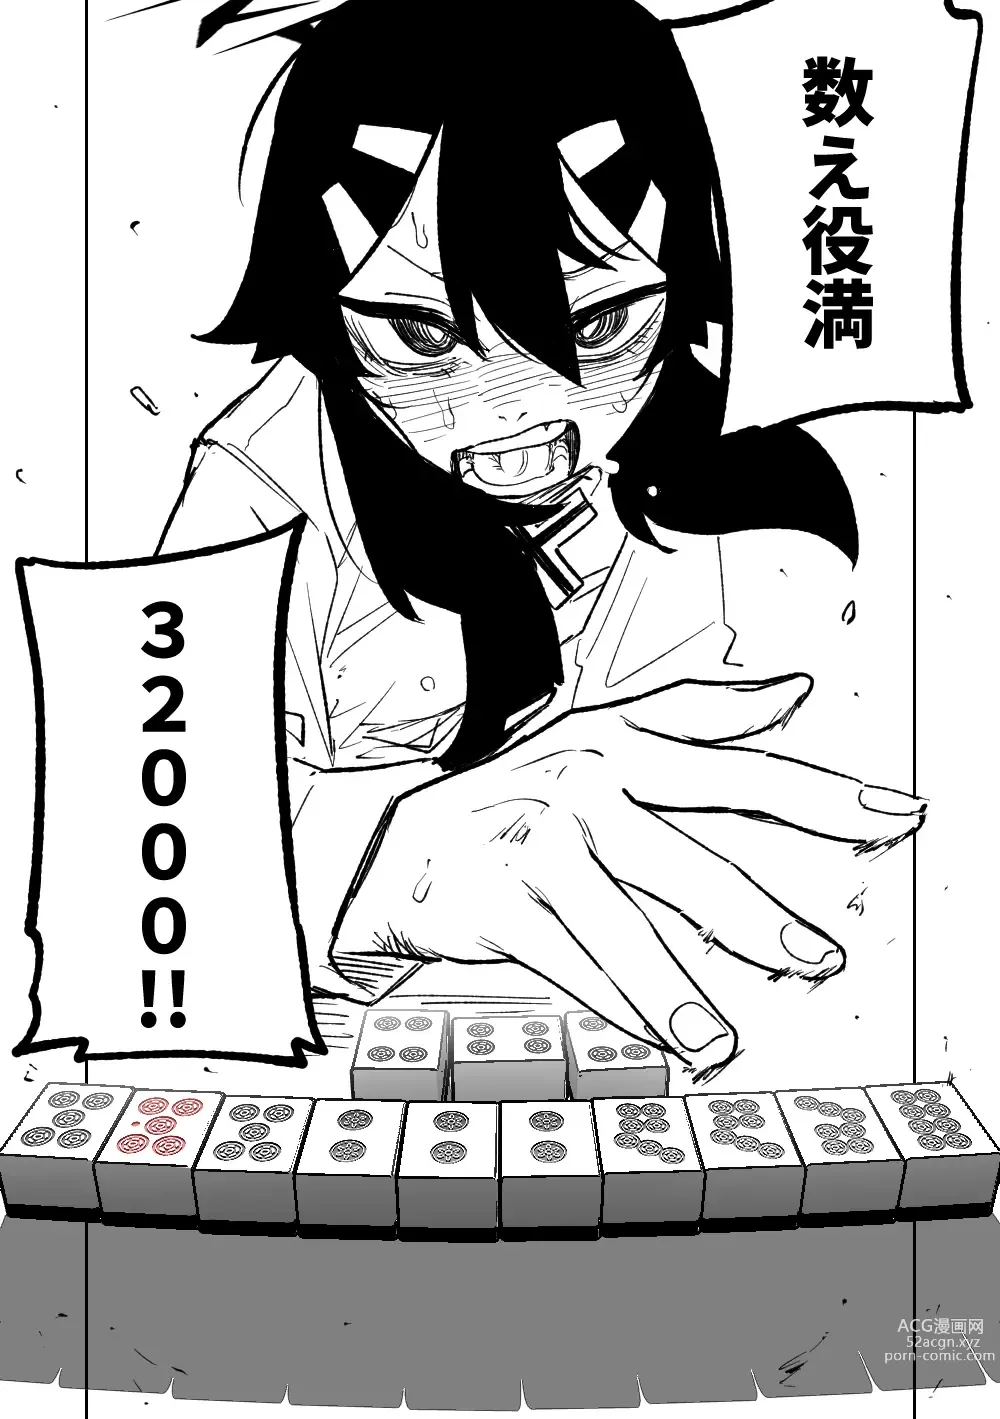 Page 193 of doujinshi Benriya 68 Datsui Mahjong Ichi ~Sankaisen~